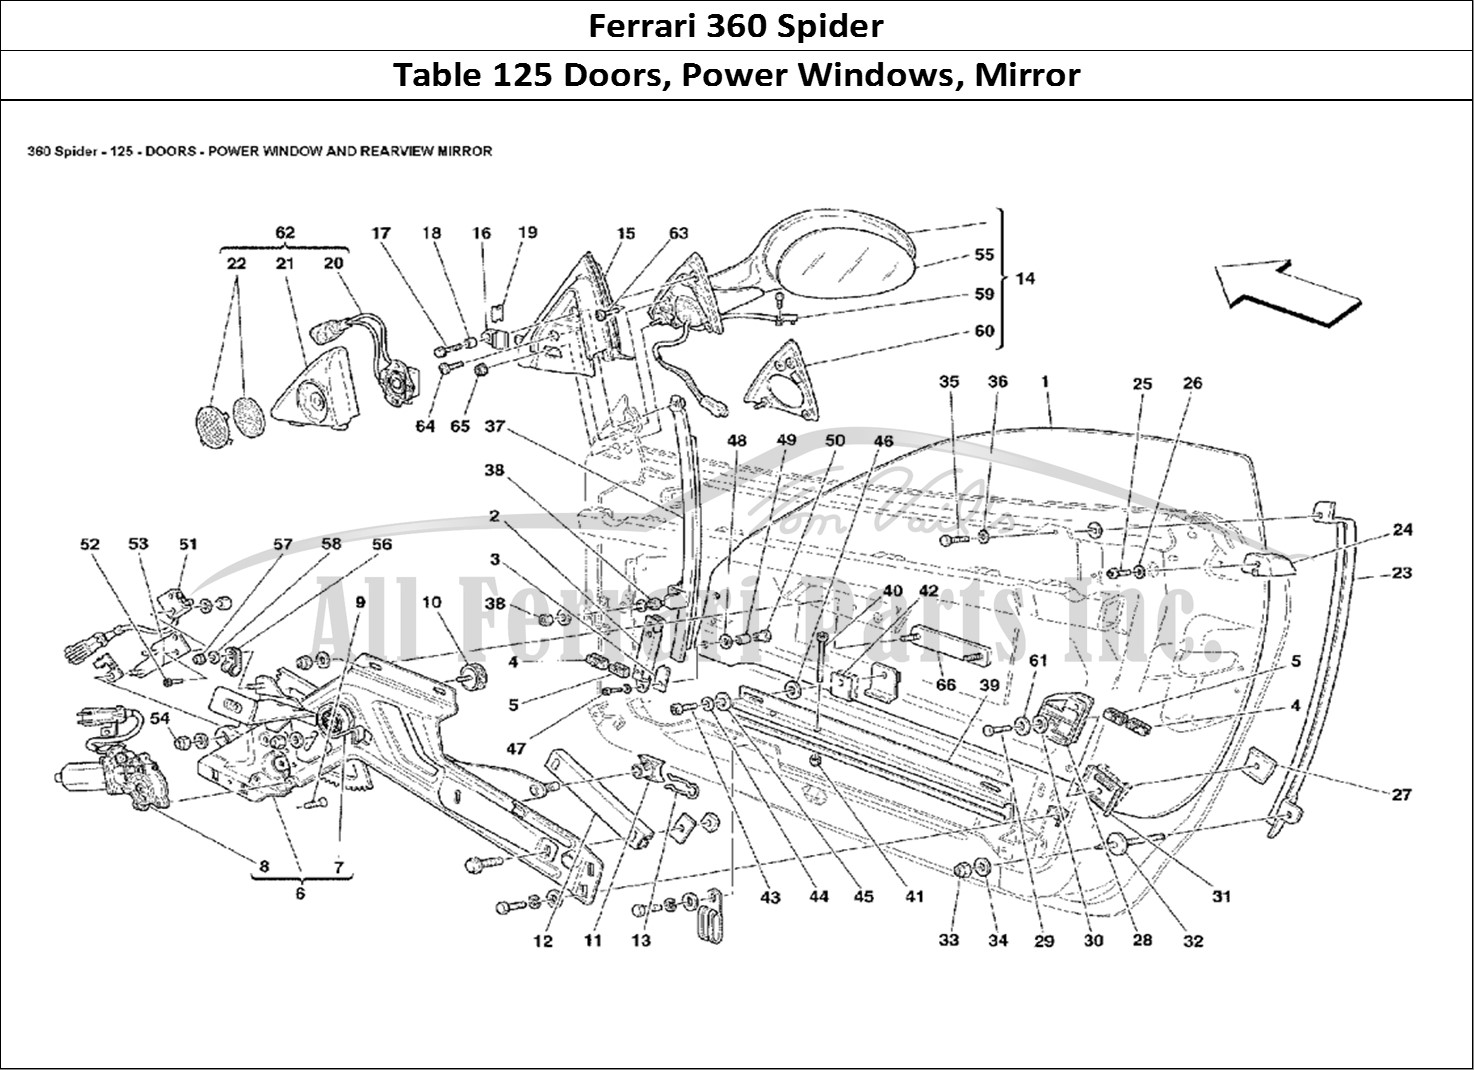 Ferrari Parts Ferrari 360 Spider Page 125 Doors - Power Window and